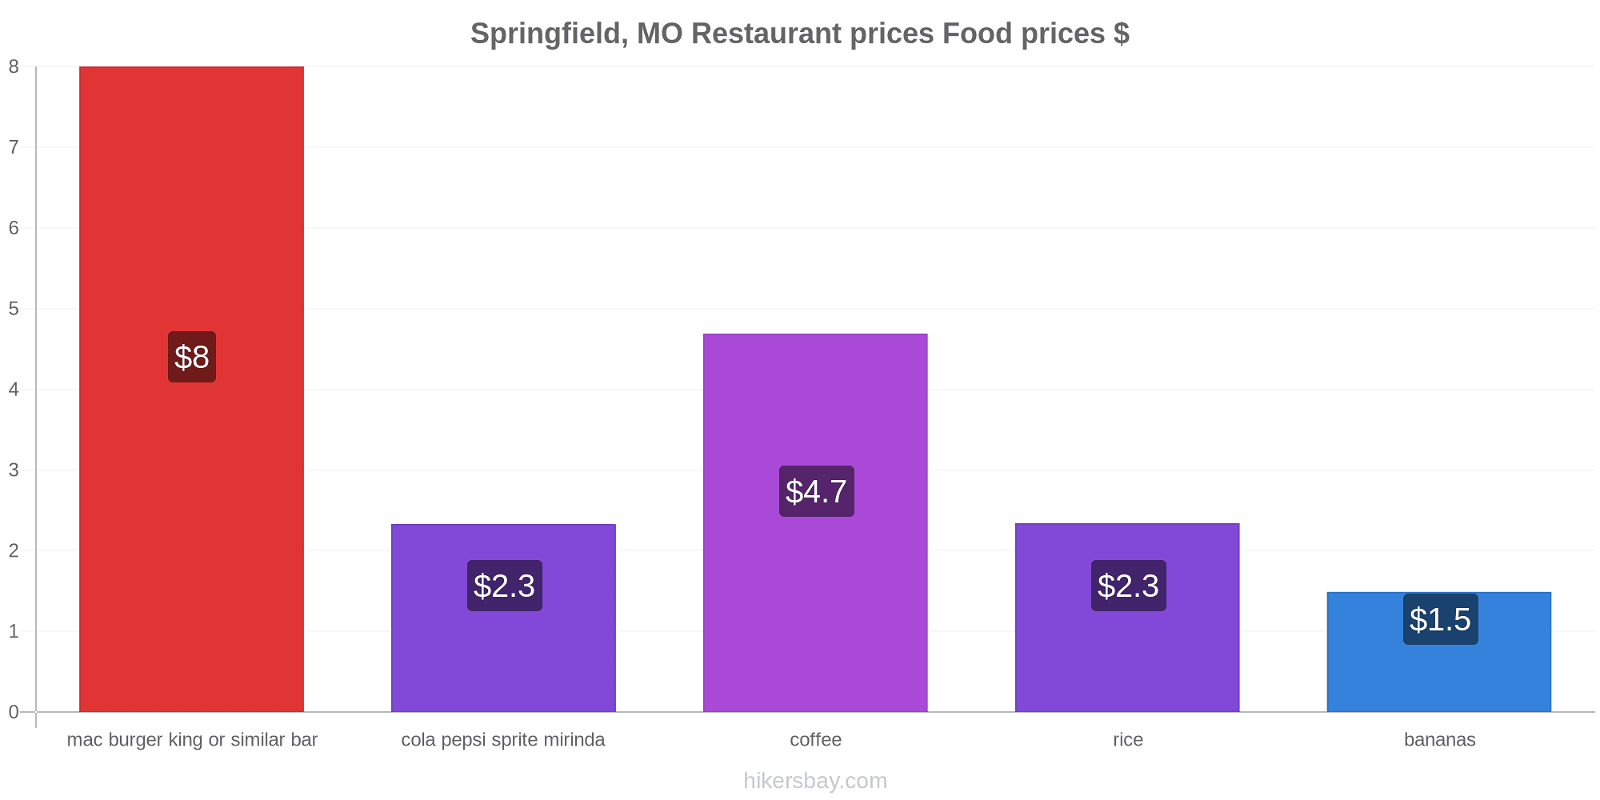 Springfield, MO price changes hikersbay.com